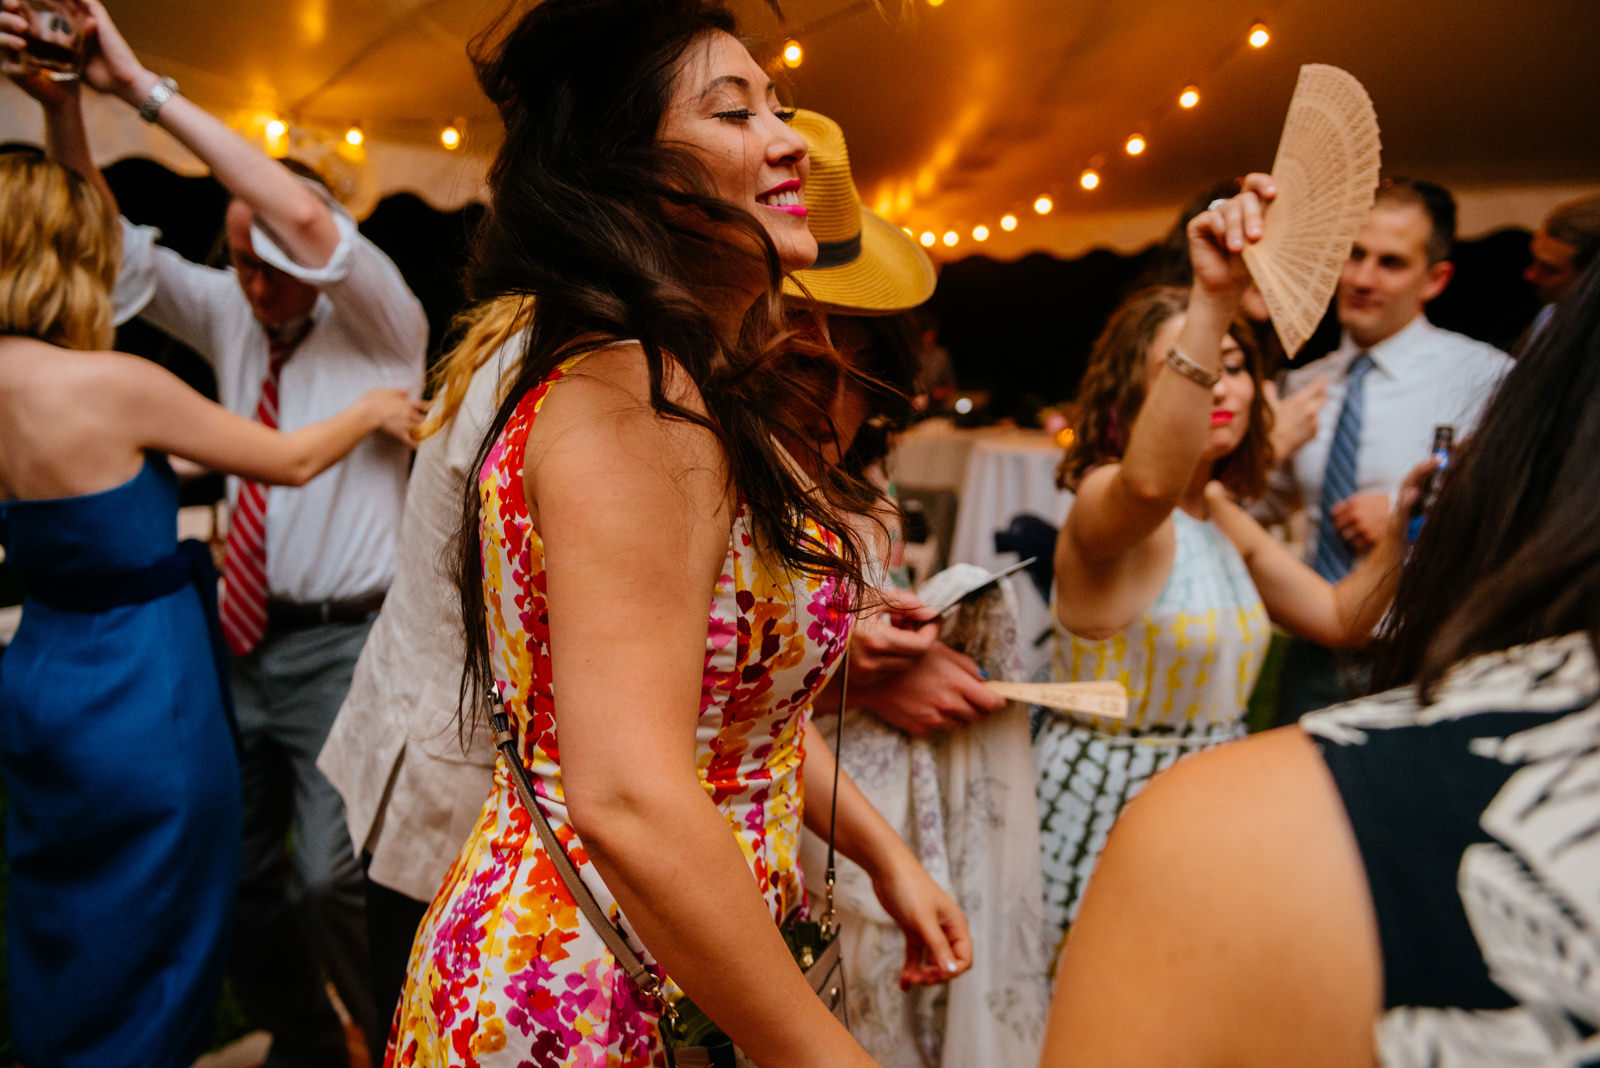 067b happy wedding guests dancing at reception